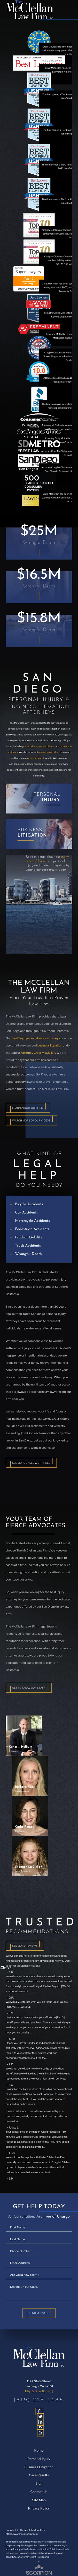 The McClellan Law Firm - San Diego CA Lawyers